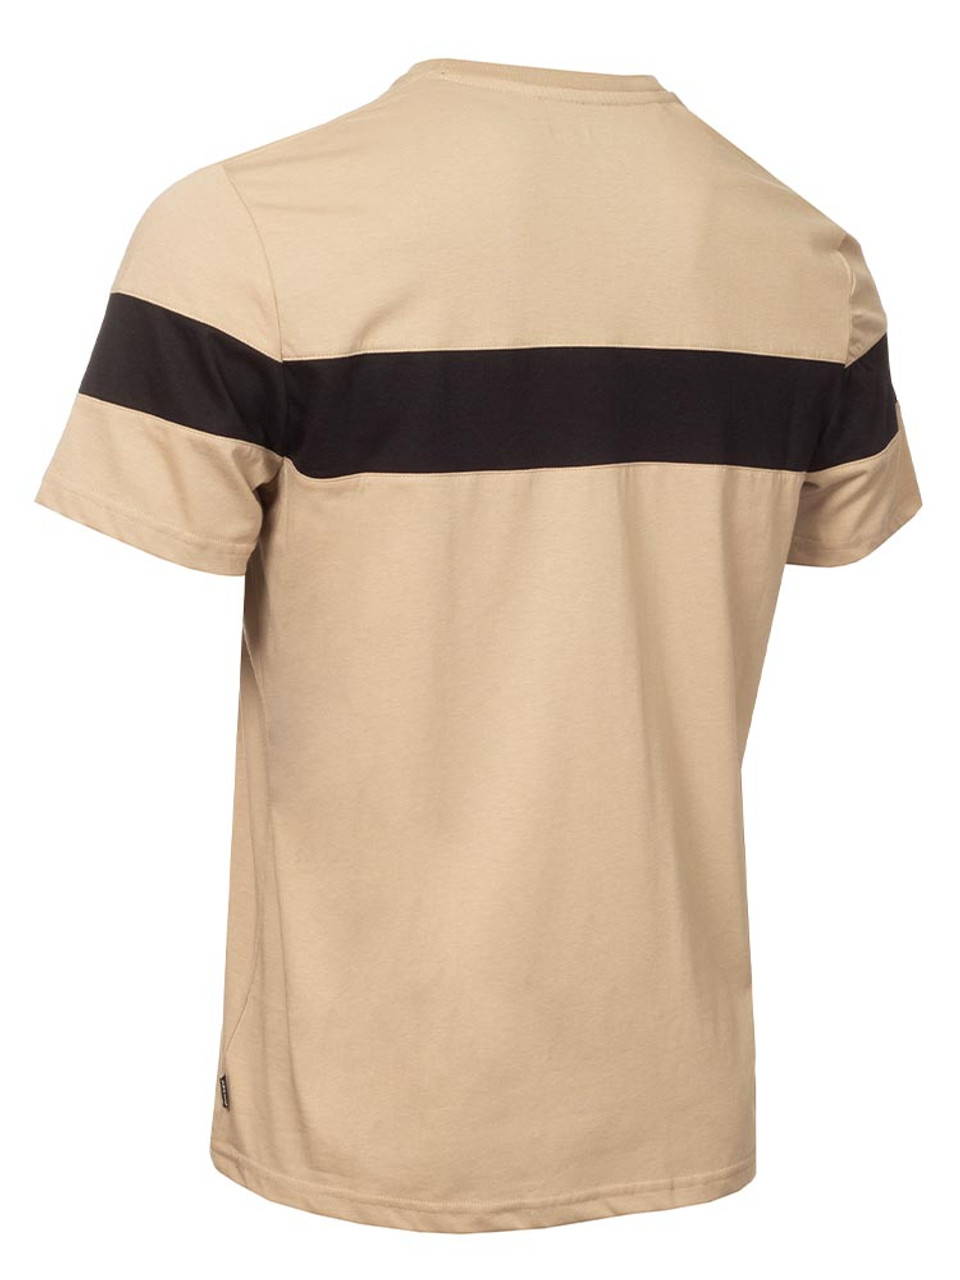 DKNY Sport East River T-Shirt - Pale Sage